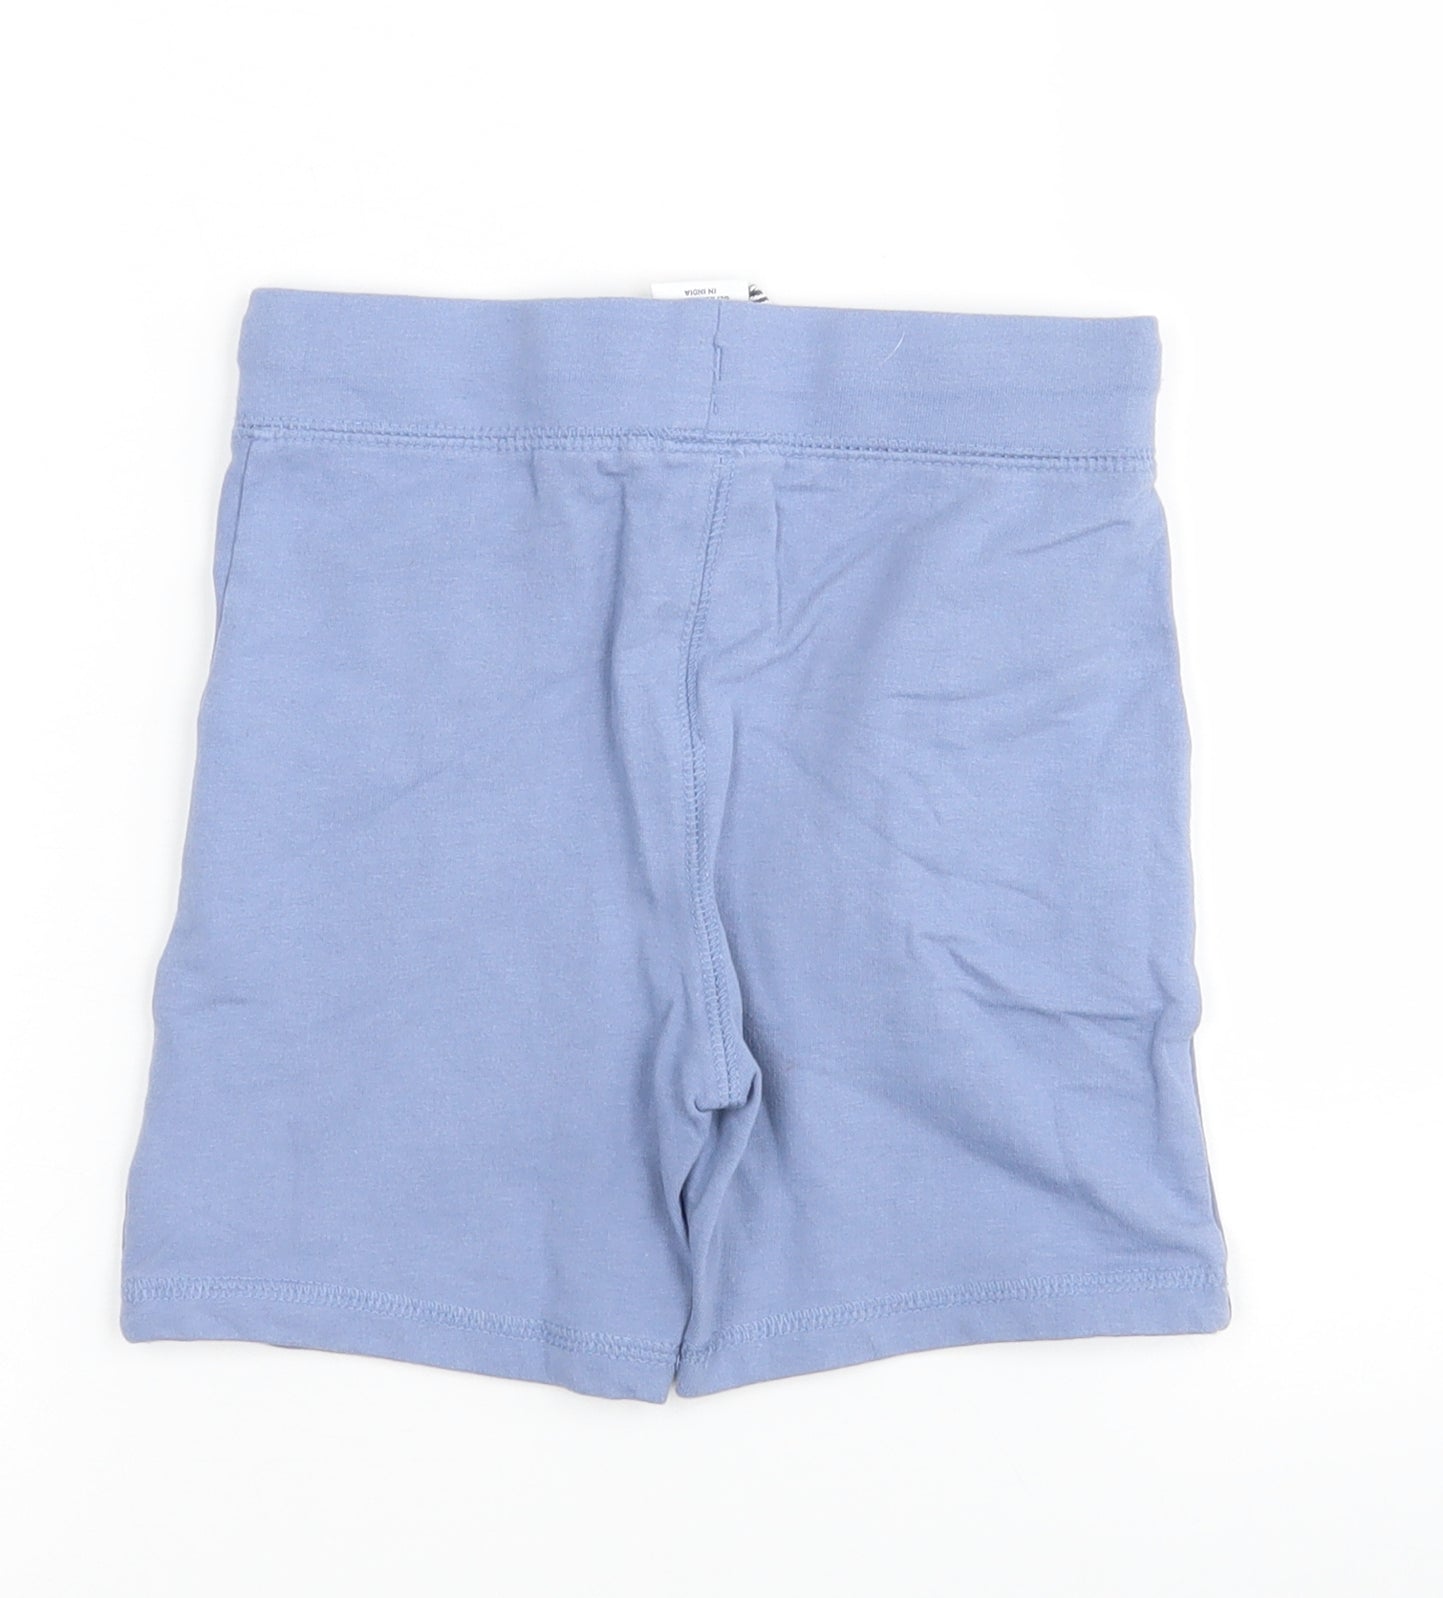 Preworn Boys Blue   Dungaree Shorts Shorts Size 2-3 Years